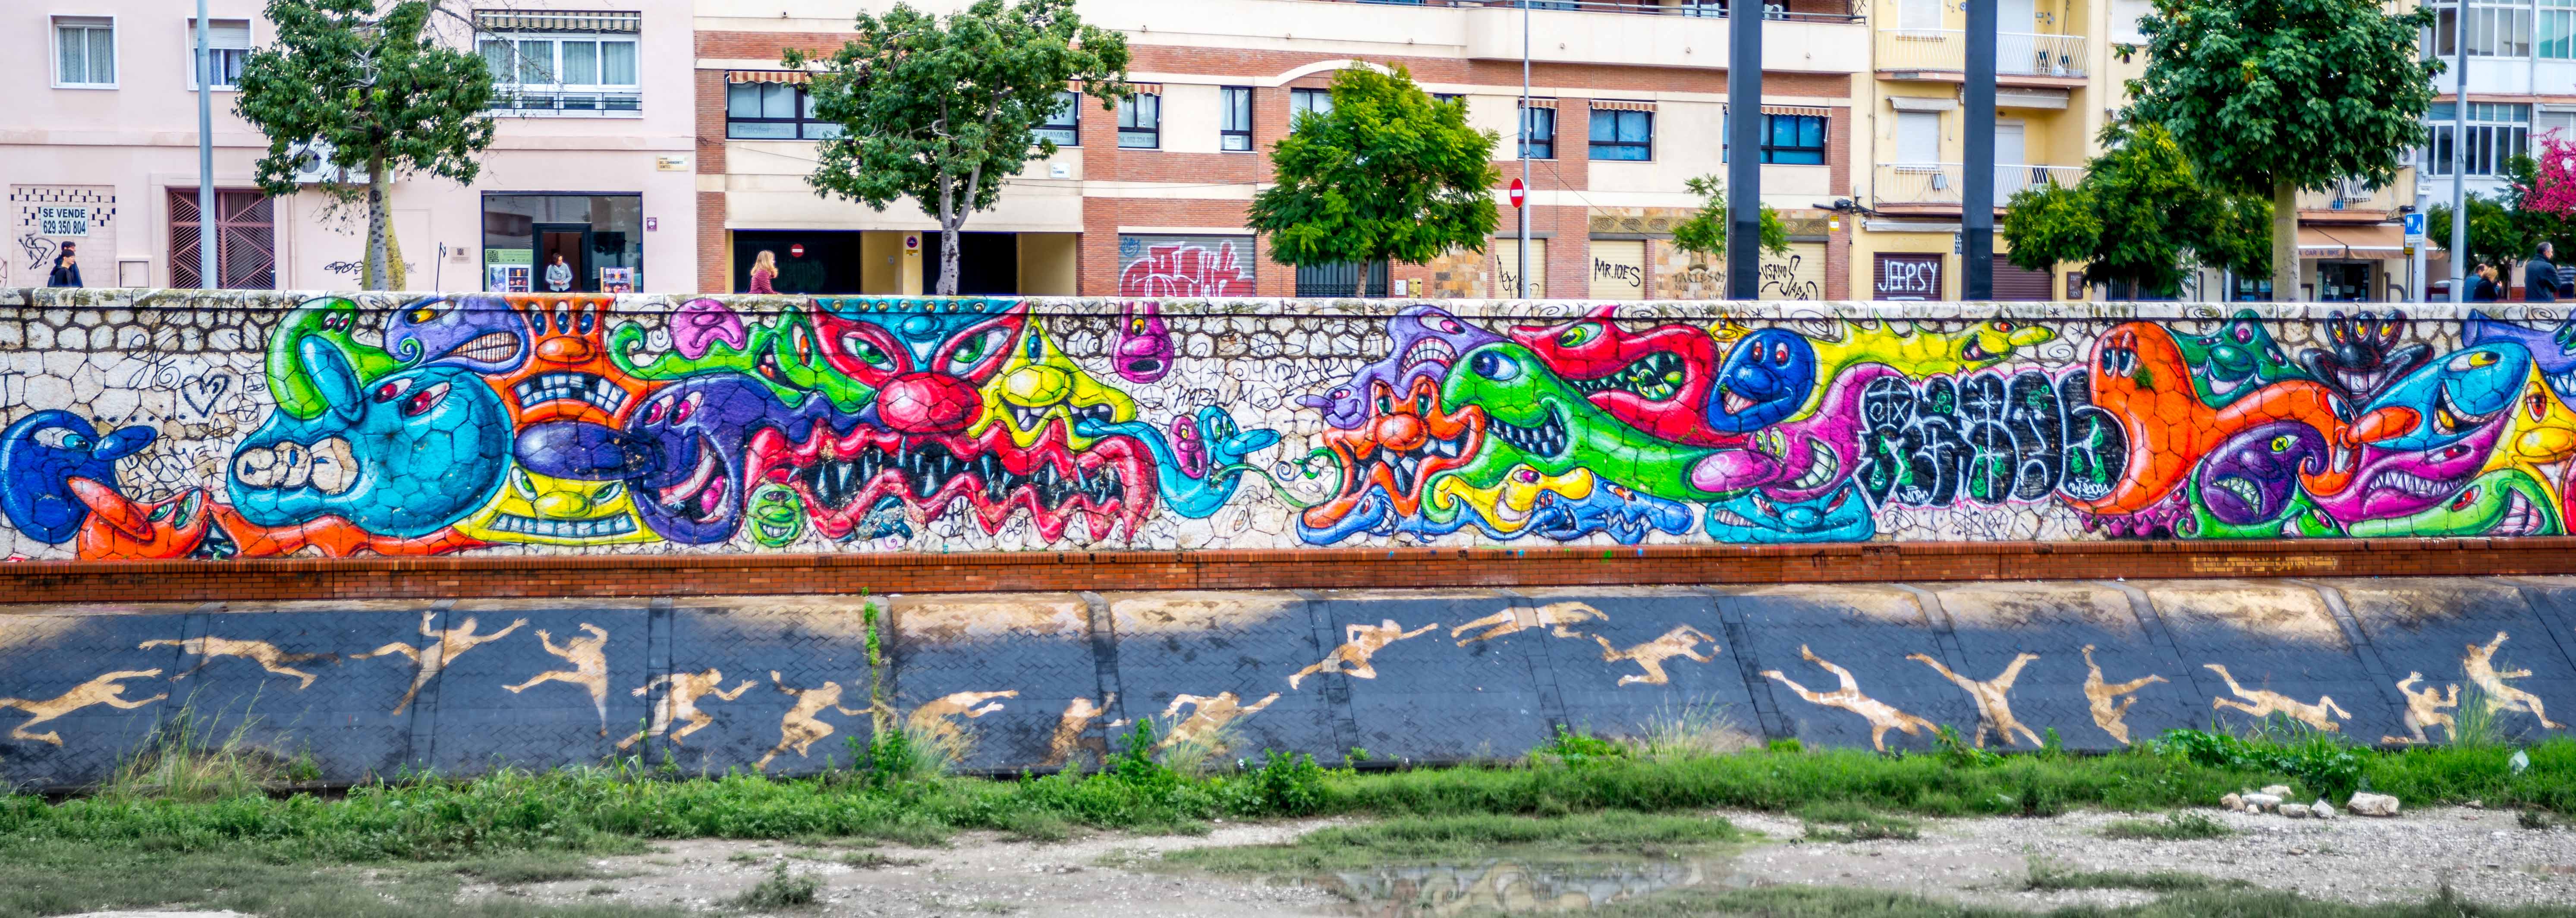 malaga-espagne-streetart-street-art-urban-art-icietlabas